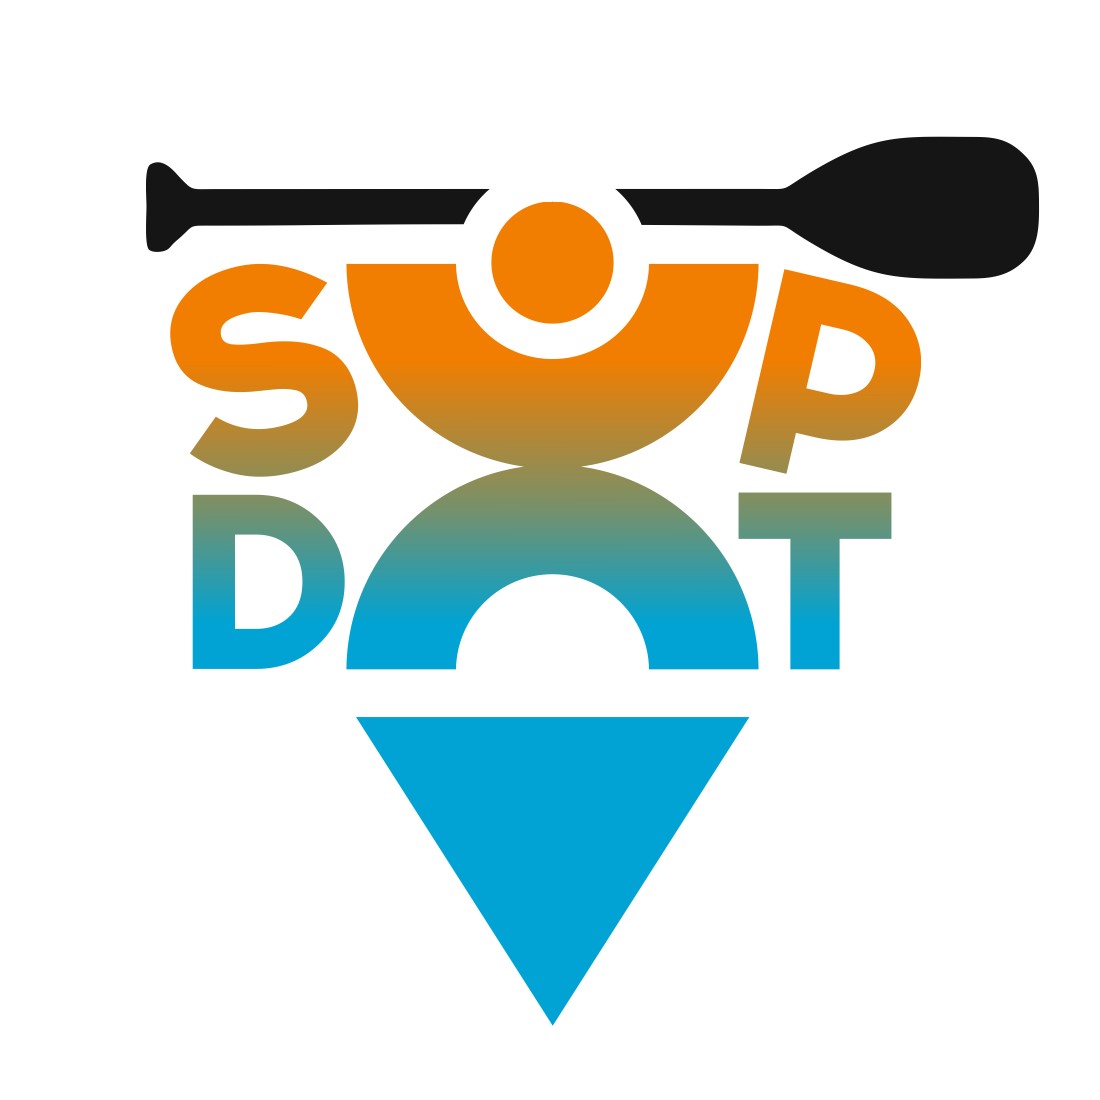 SUPâ¢DOT logo design by logo designer Kovalen.com for your inspiration and for the worlds largest logo competition